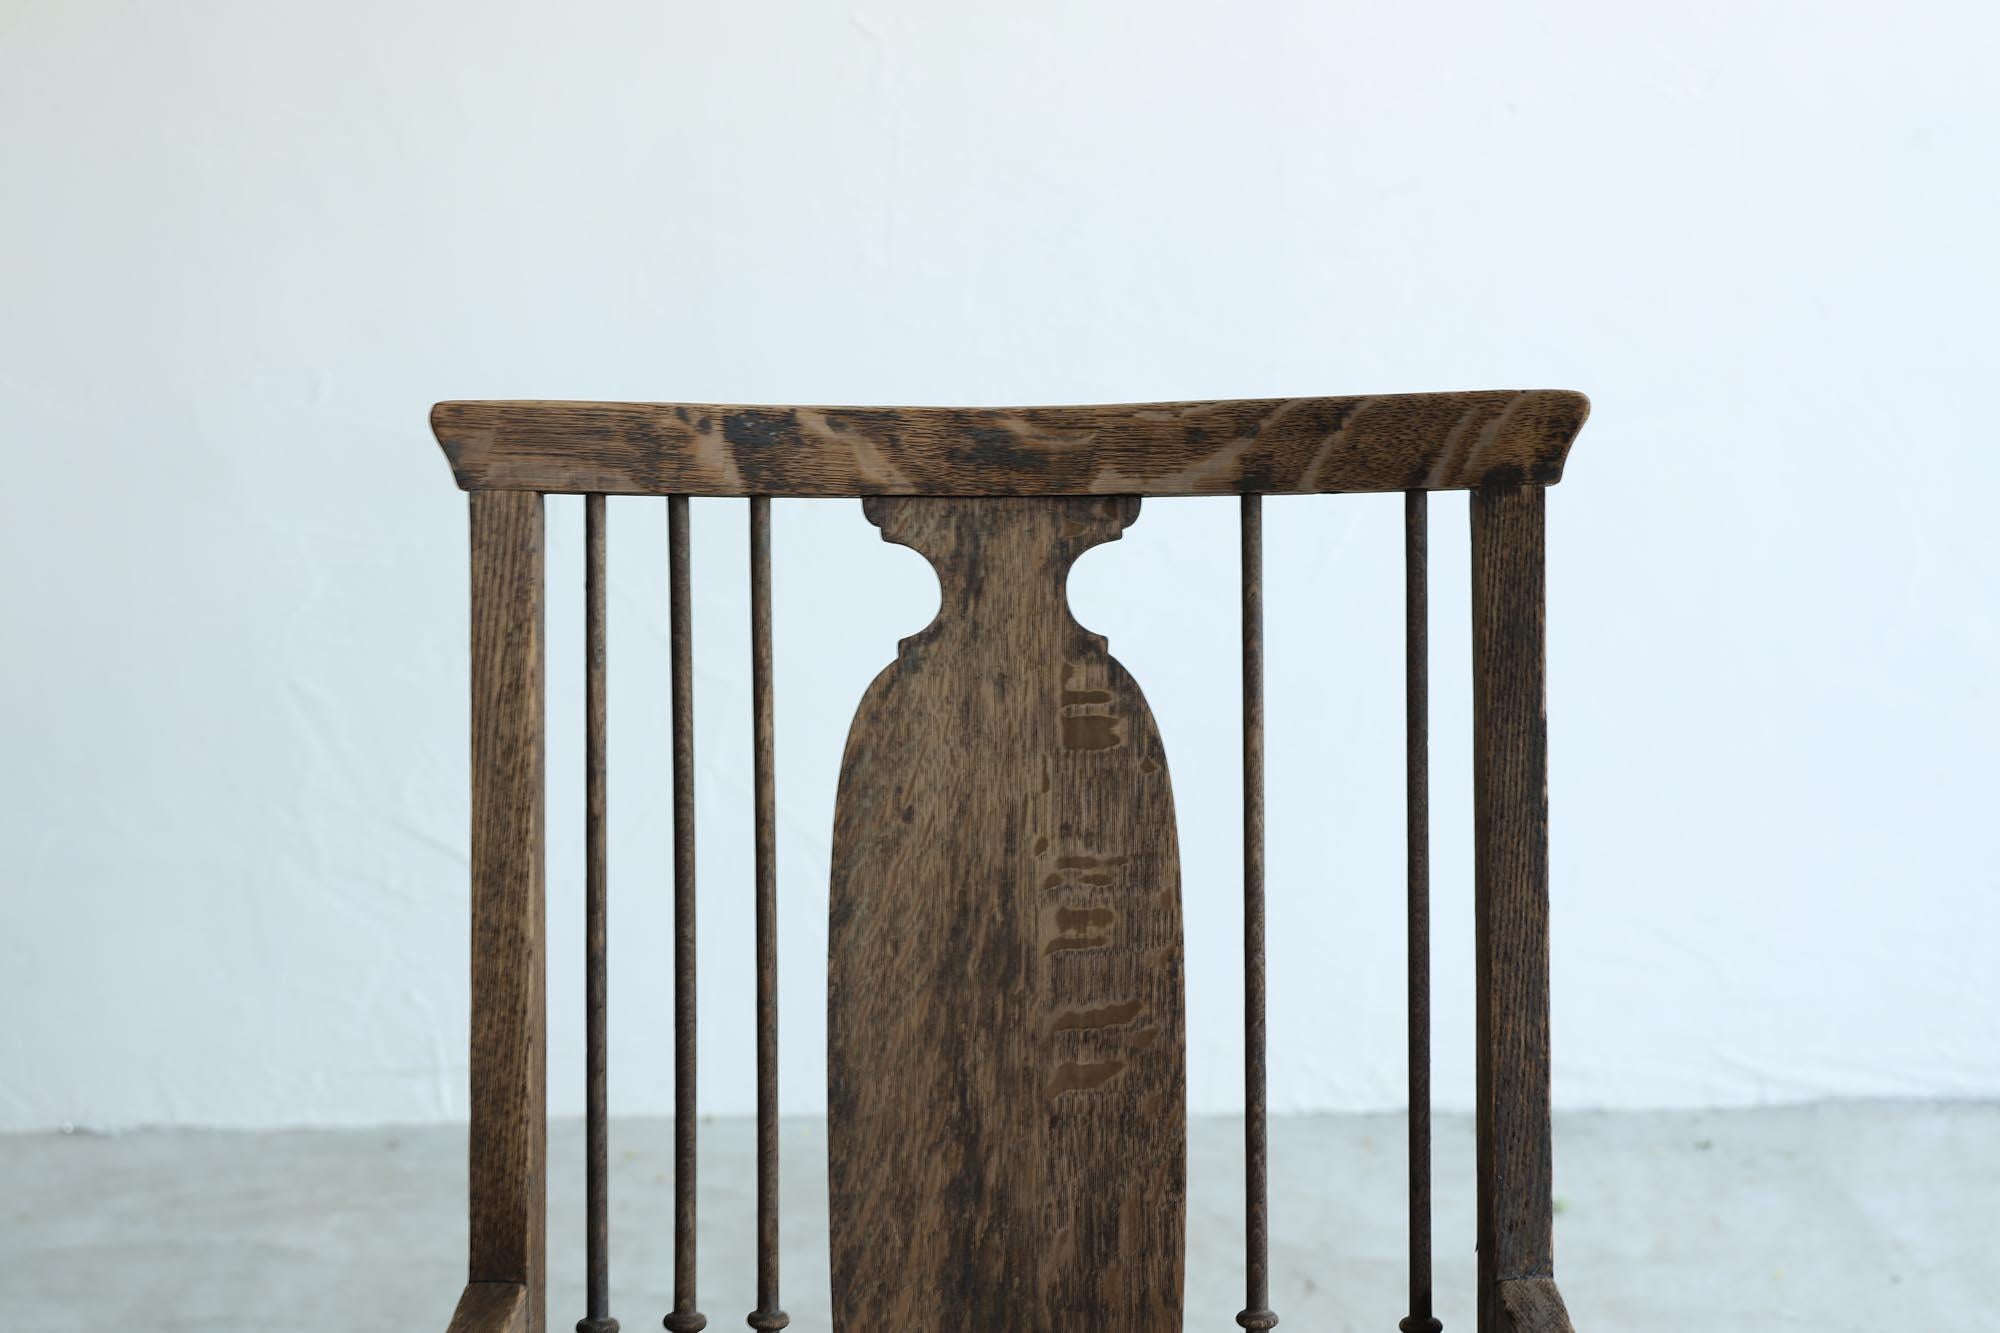 Taisho Japanese Antique Rocking Chair, Primitive Japanese Wooden Cahair, Wabi-Sabi